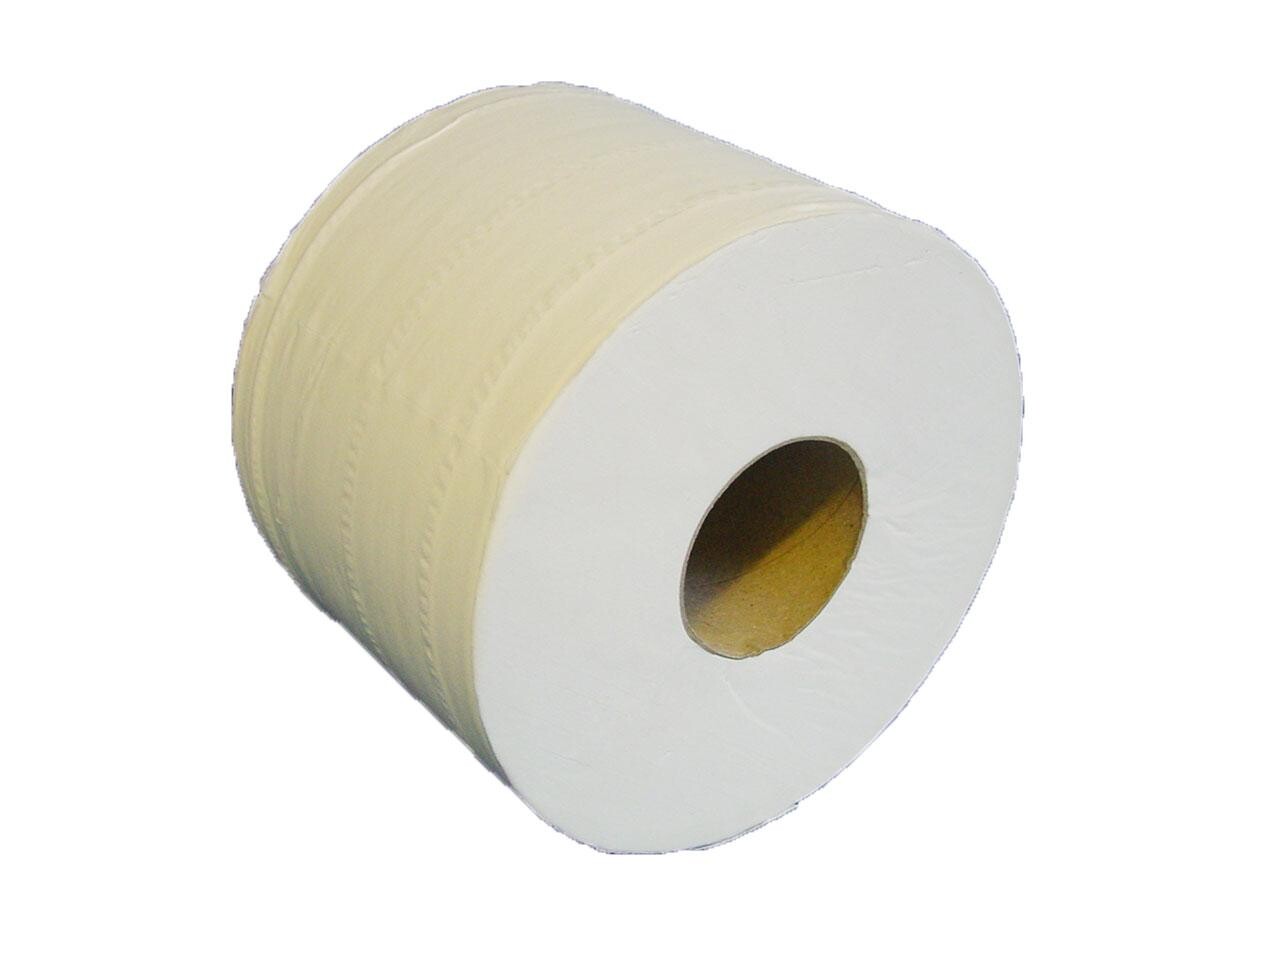 Toilet Paper SmartOne 2-ply 6 rolls 180m Tissue